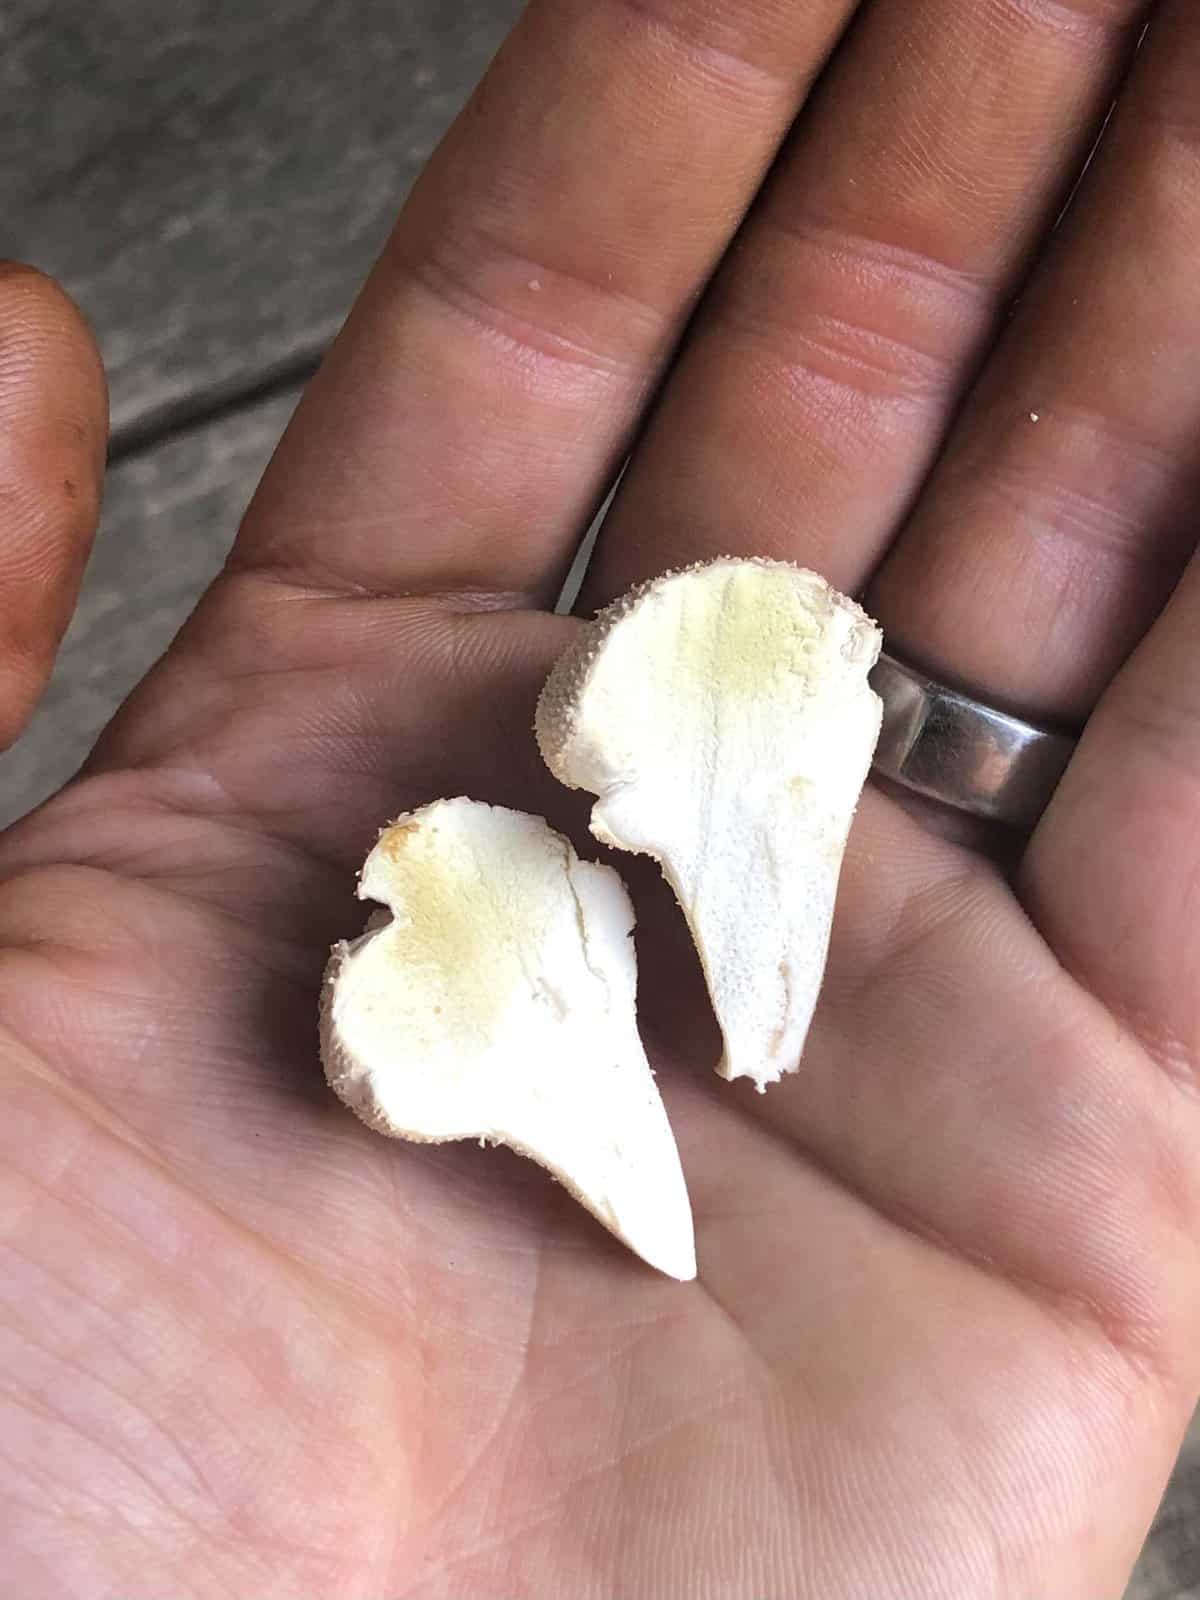 Small, old puffball mushroom